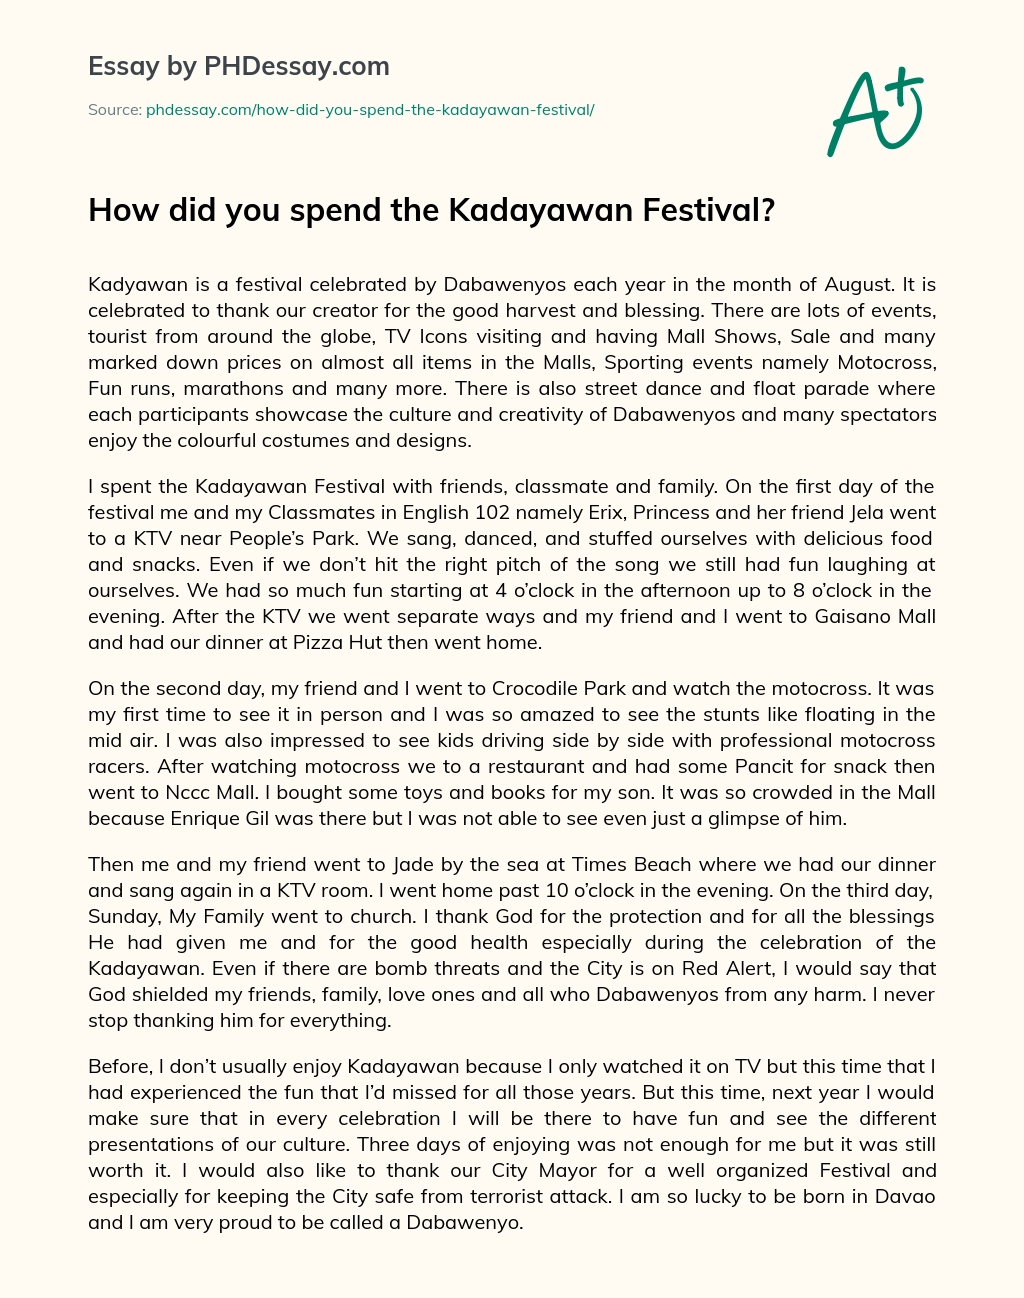 How did you spend the Kadayawan Festival? essay